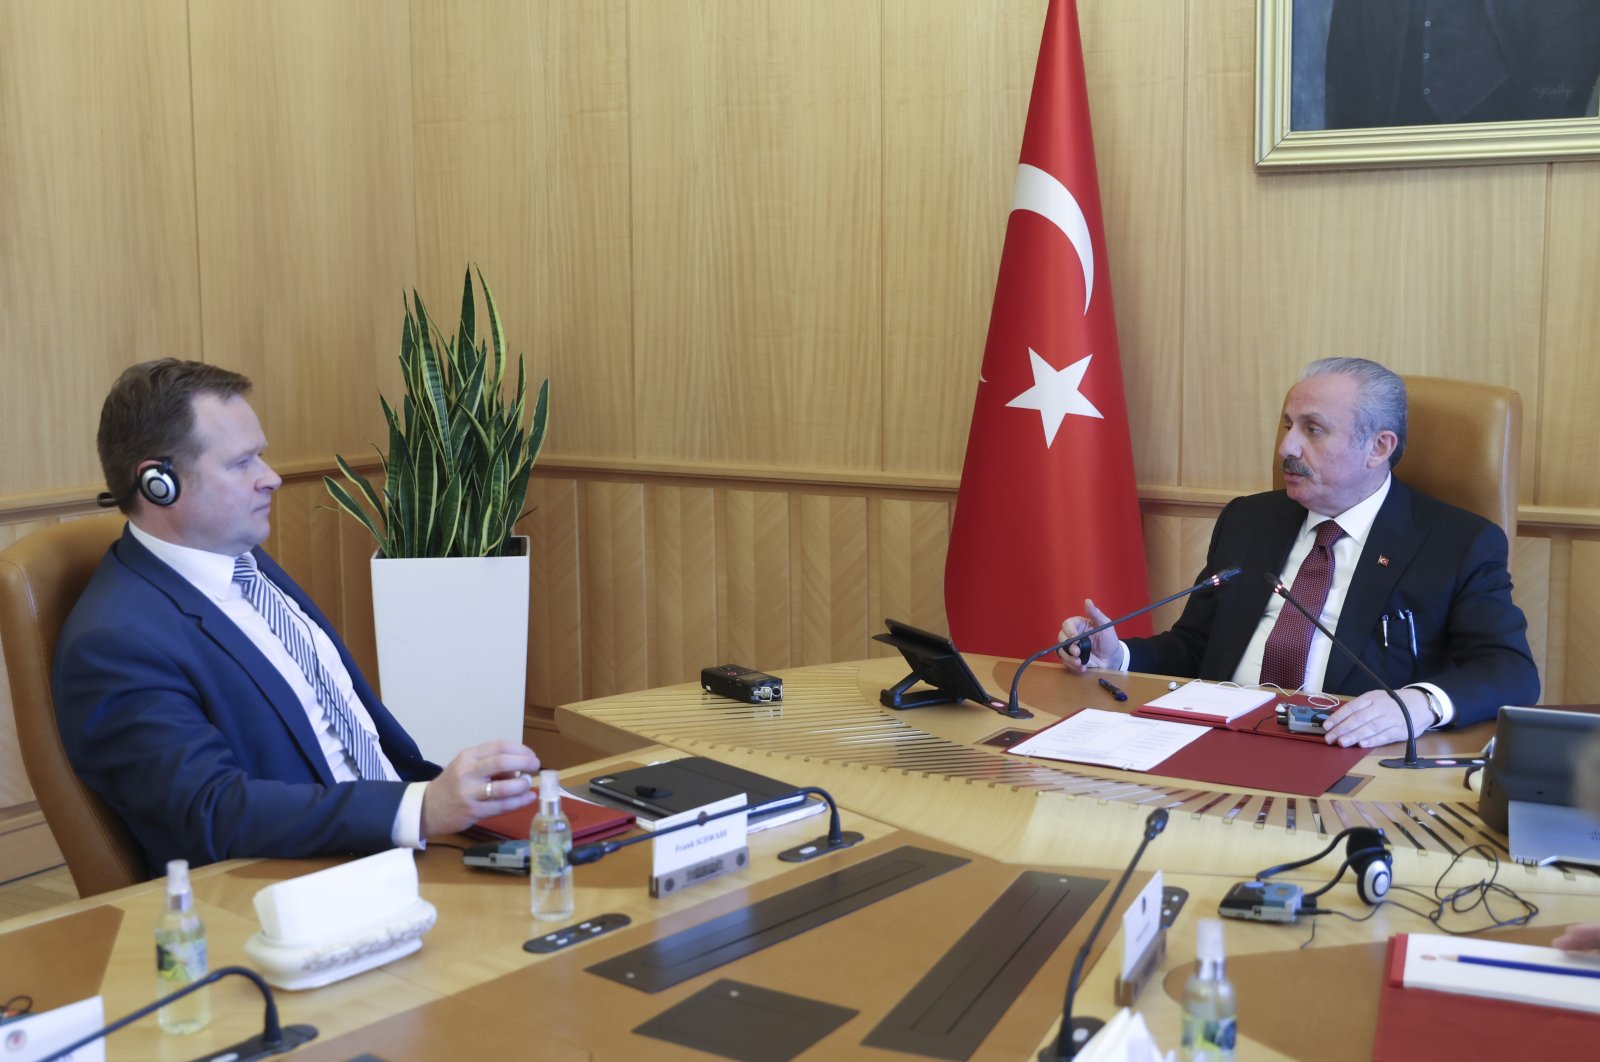 Parliament Speaker Mustafa Şentop (R) speaks with delegation head Frank Schwabe, in the capital Ankara, Türkiye, April 13, 2023. (AA Photo)